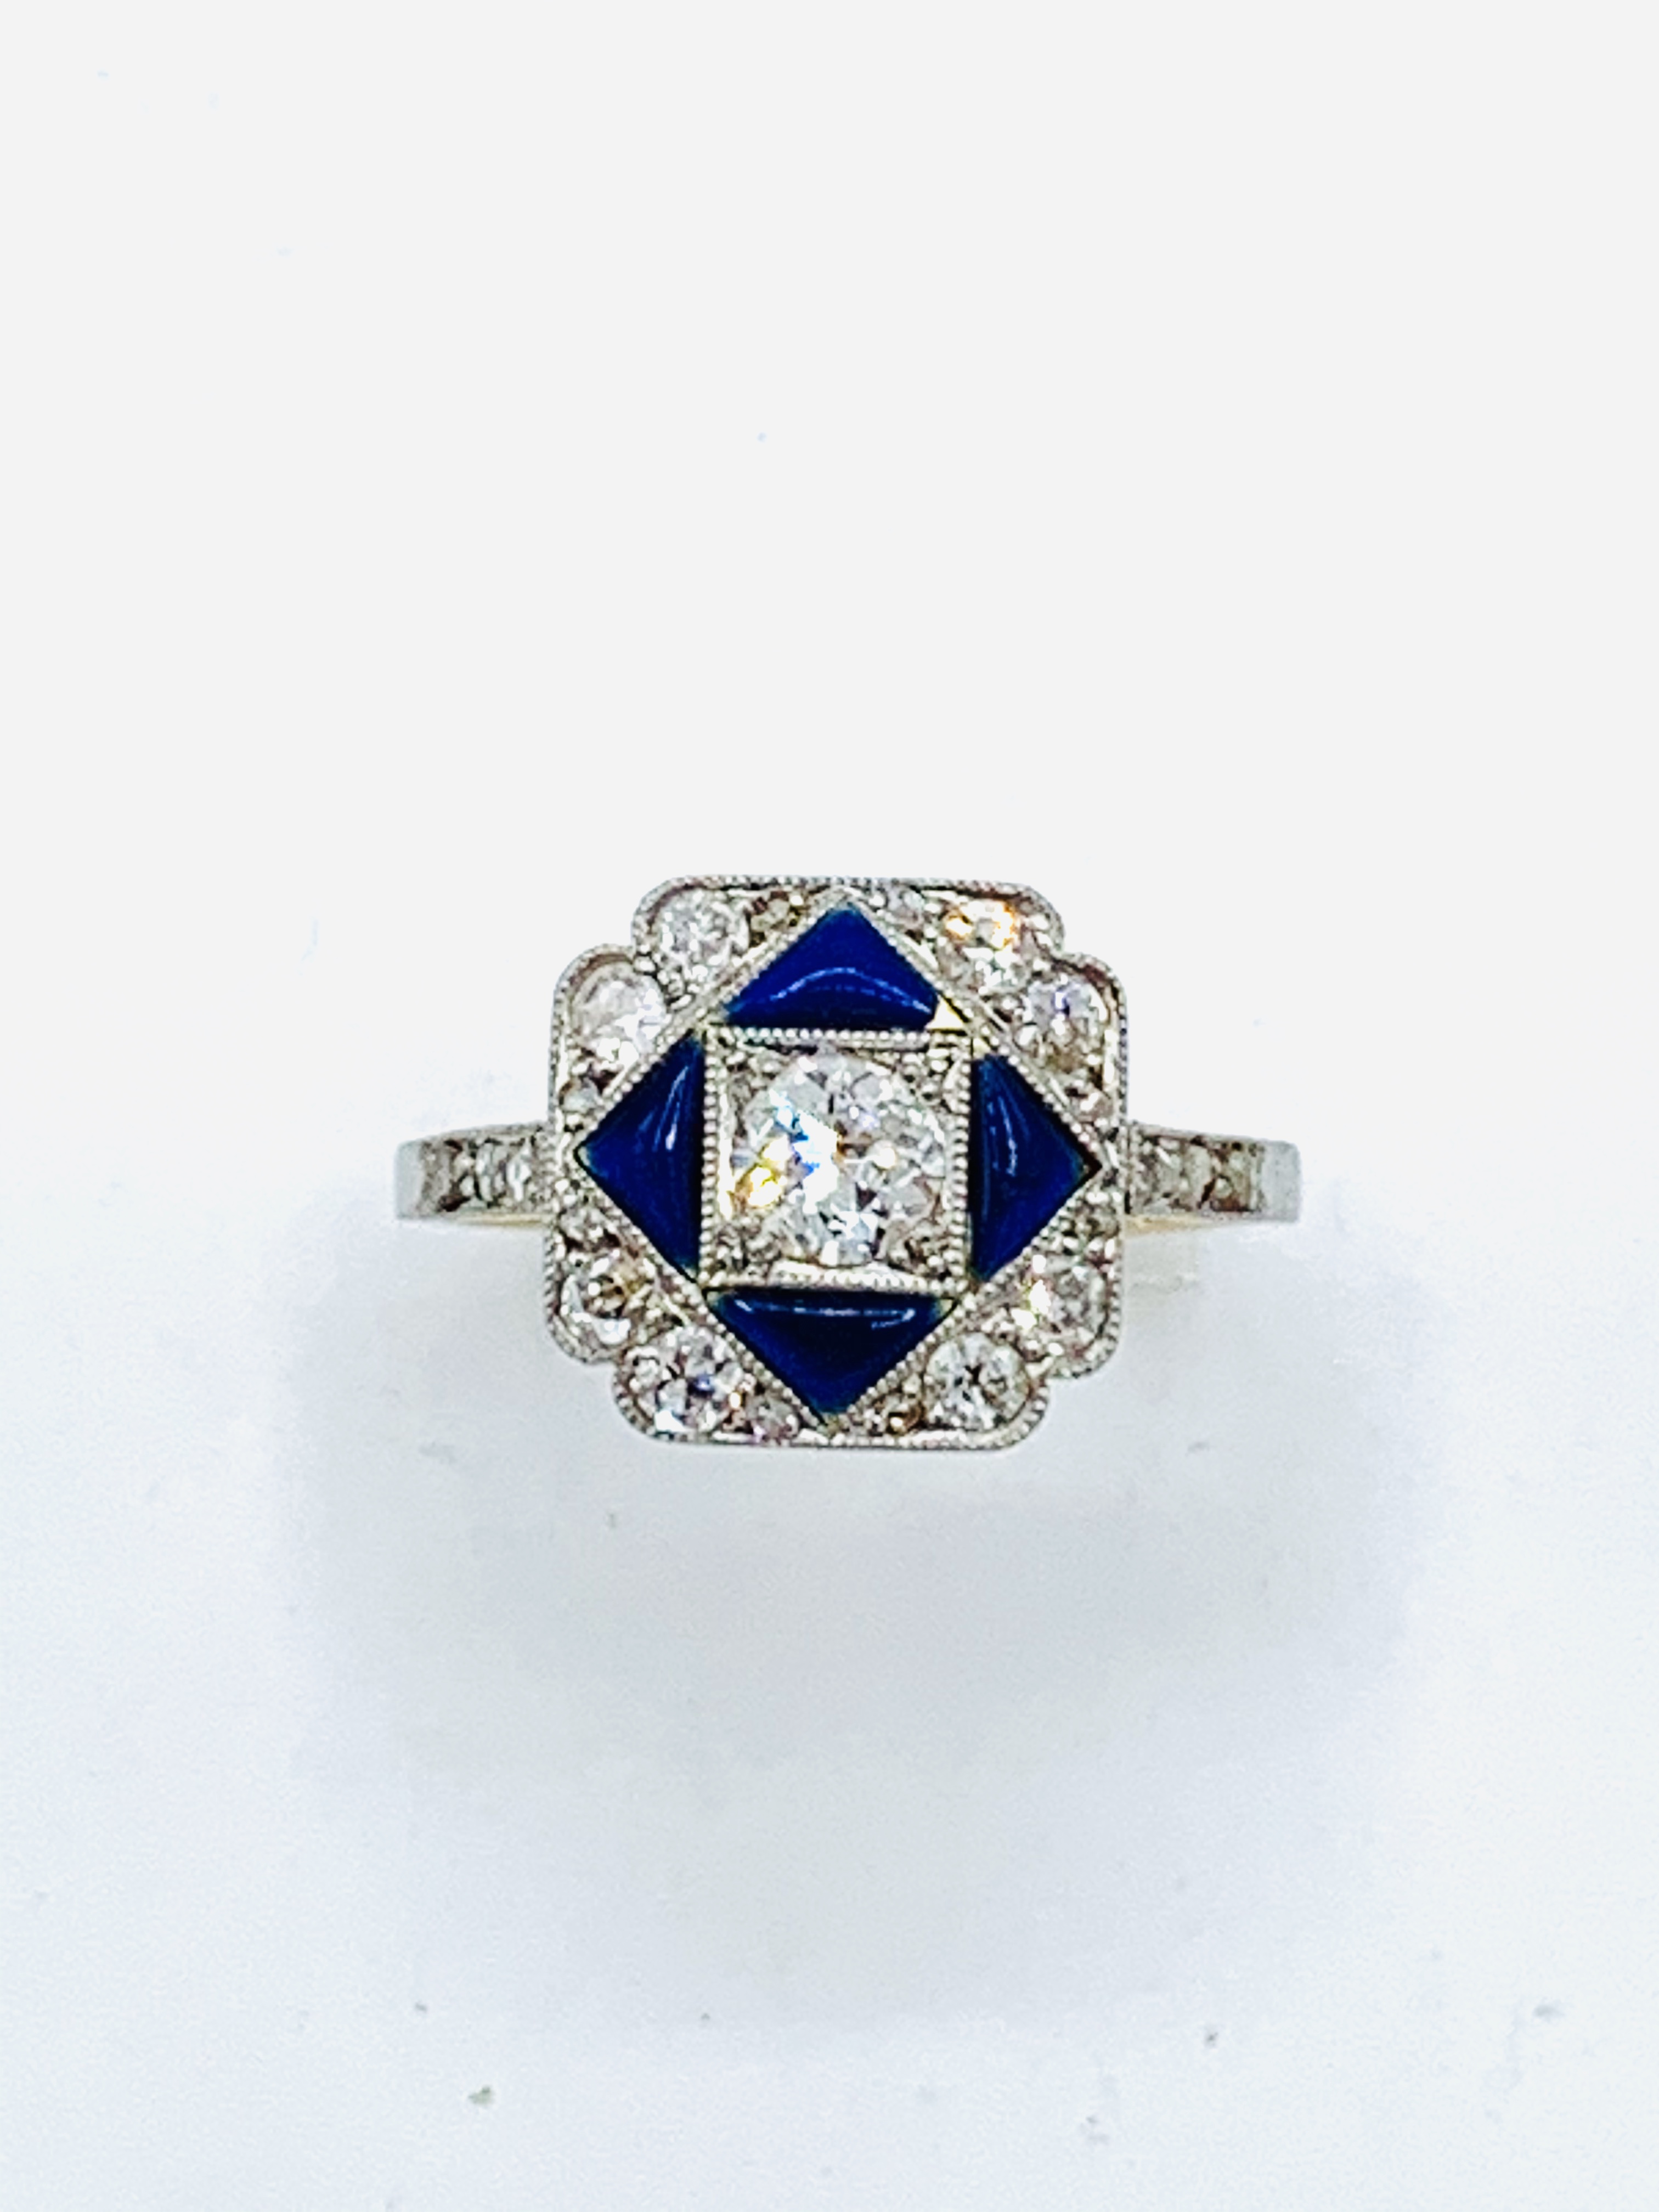 Diamond and blue enamel ring. - Image 4 of 9